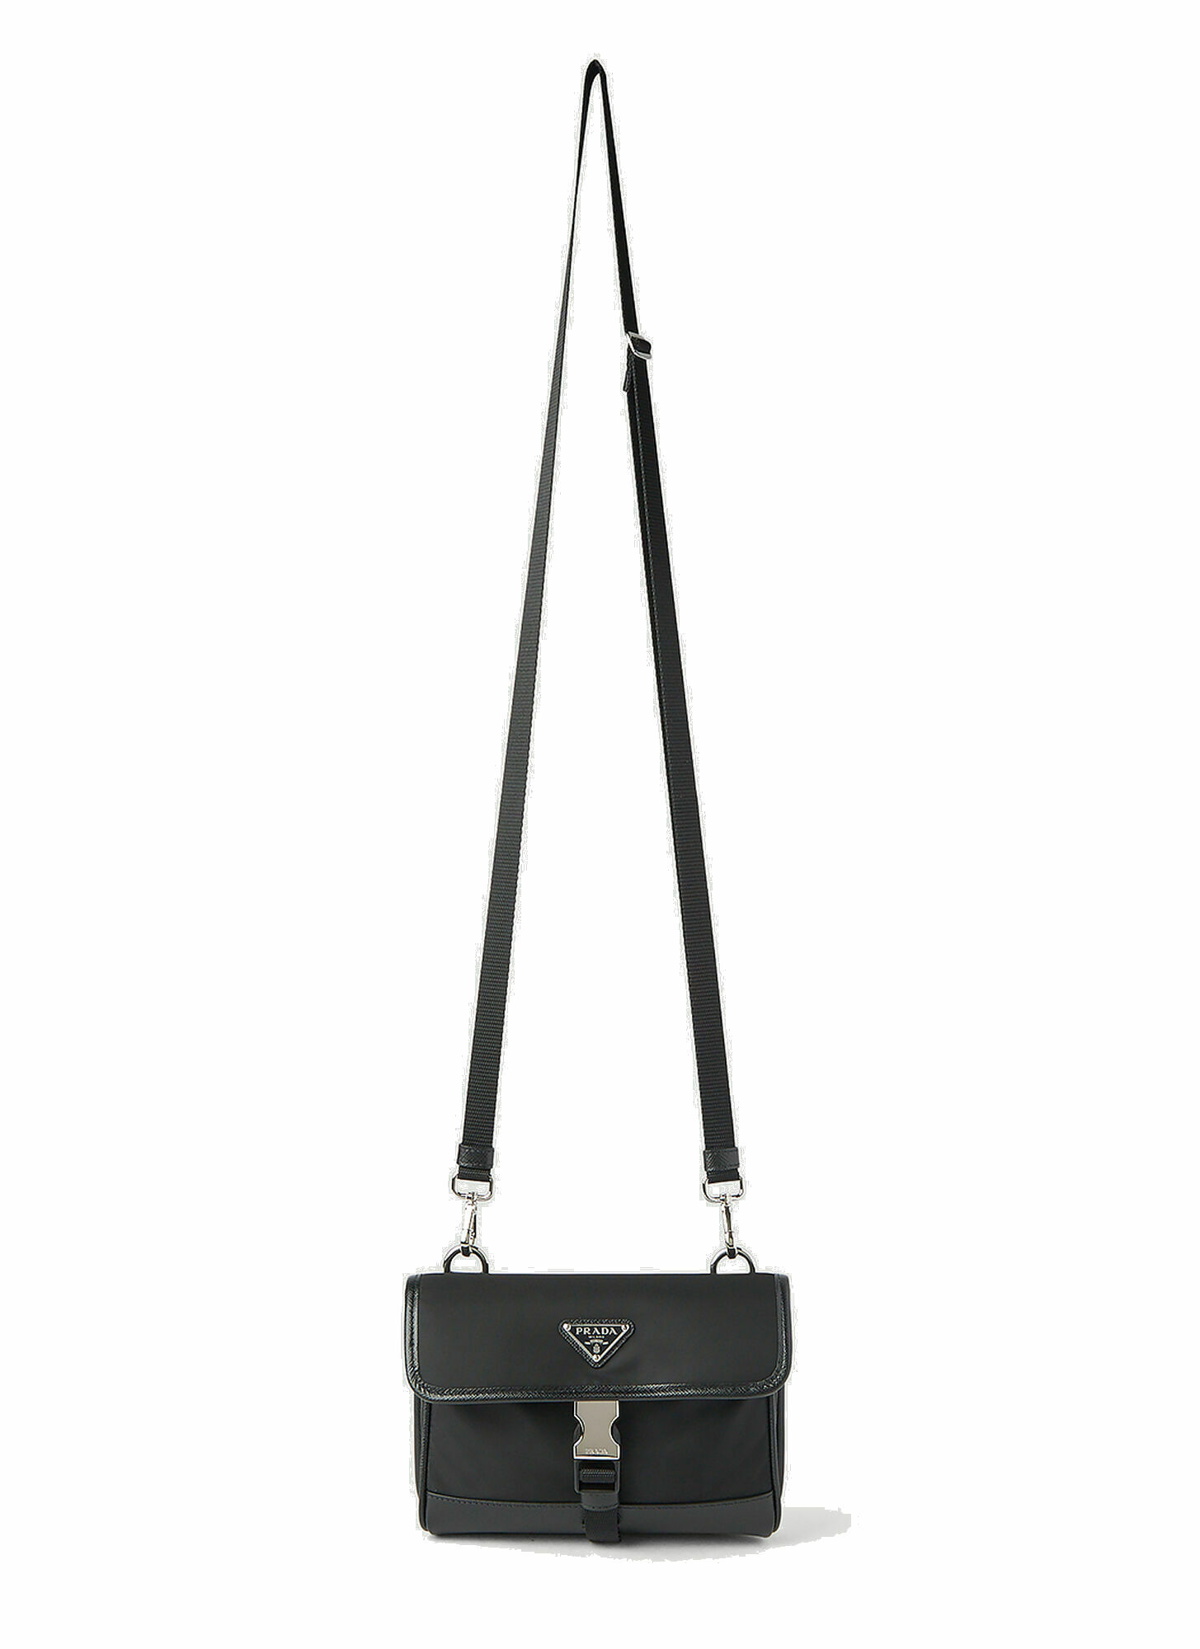 PRADA Re-Nylon Saffiano Leather Smartphone Case Shoulder Bag White